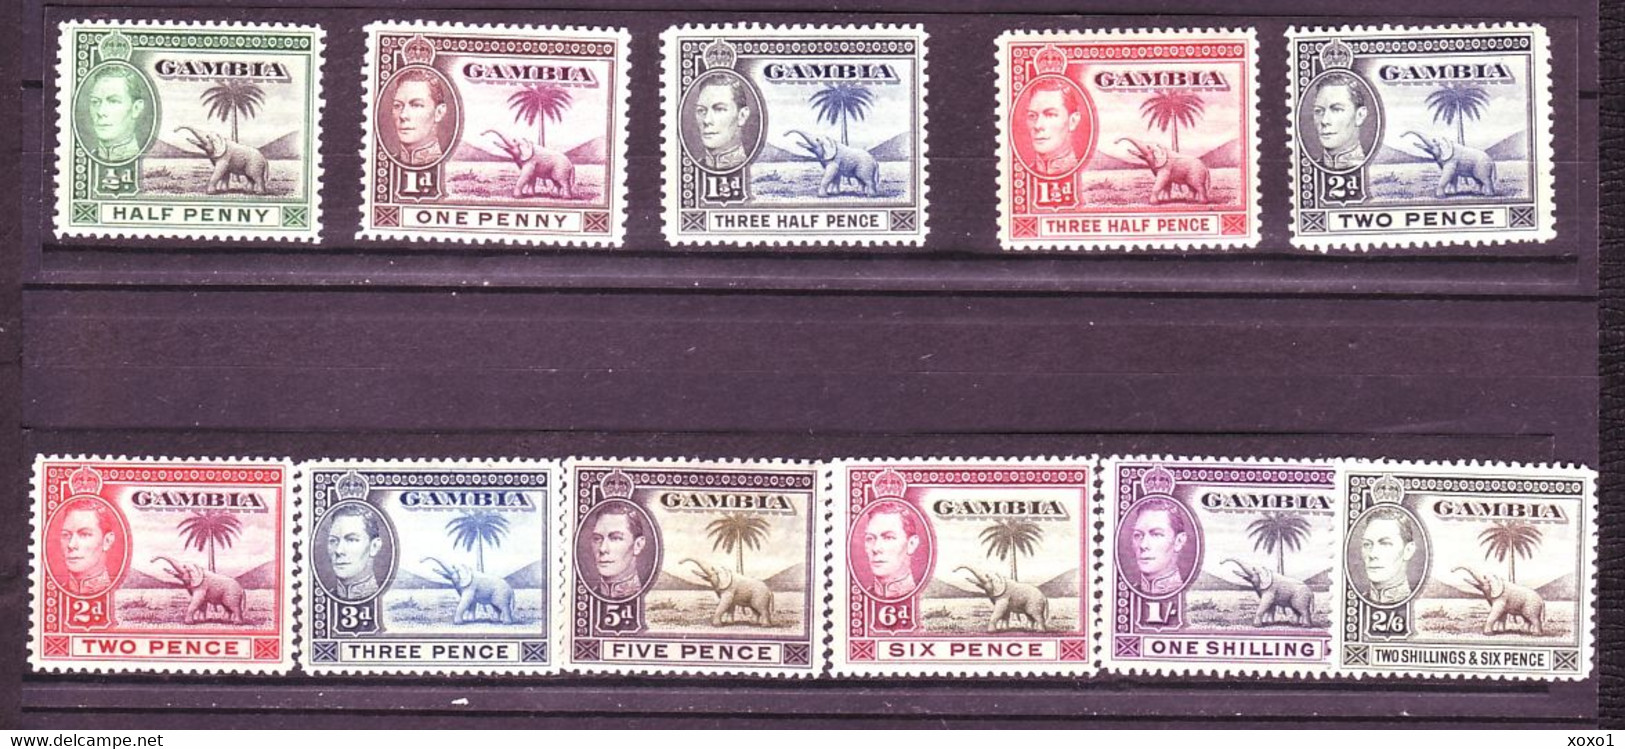 Gambia 1938  MiNr. 123 - 133  Animals King George VI Elephant 11v  MLH*  23.00 € - Gambia (...-1964)